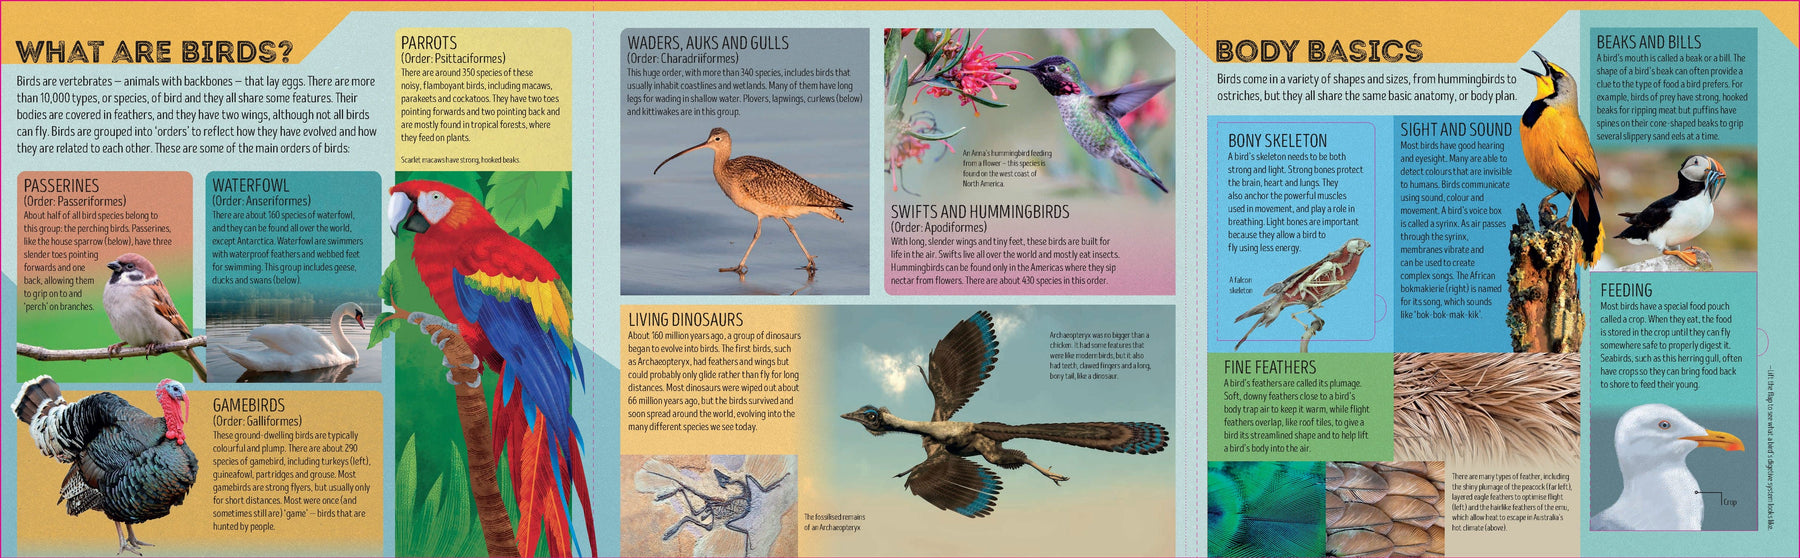 Bird Atlas (North and South America edition)